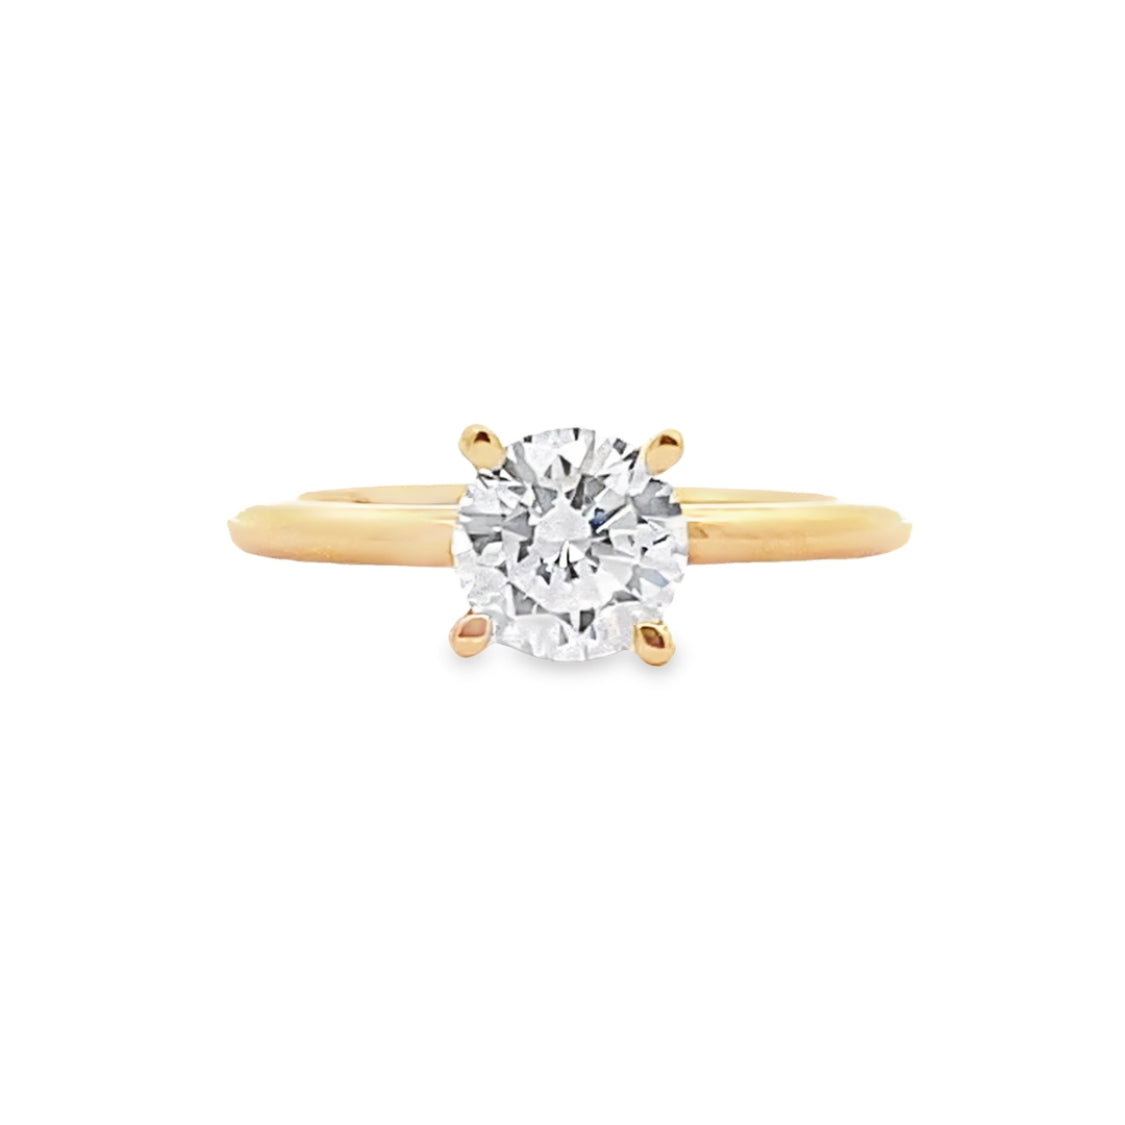 FANA 14 Karat Yellow Gold with Side Stones Round Shape Engagement Ring S4013/YG